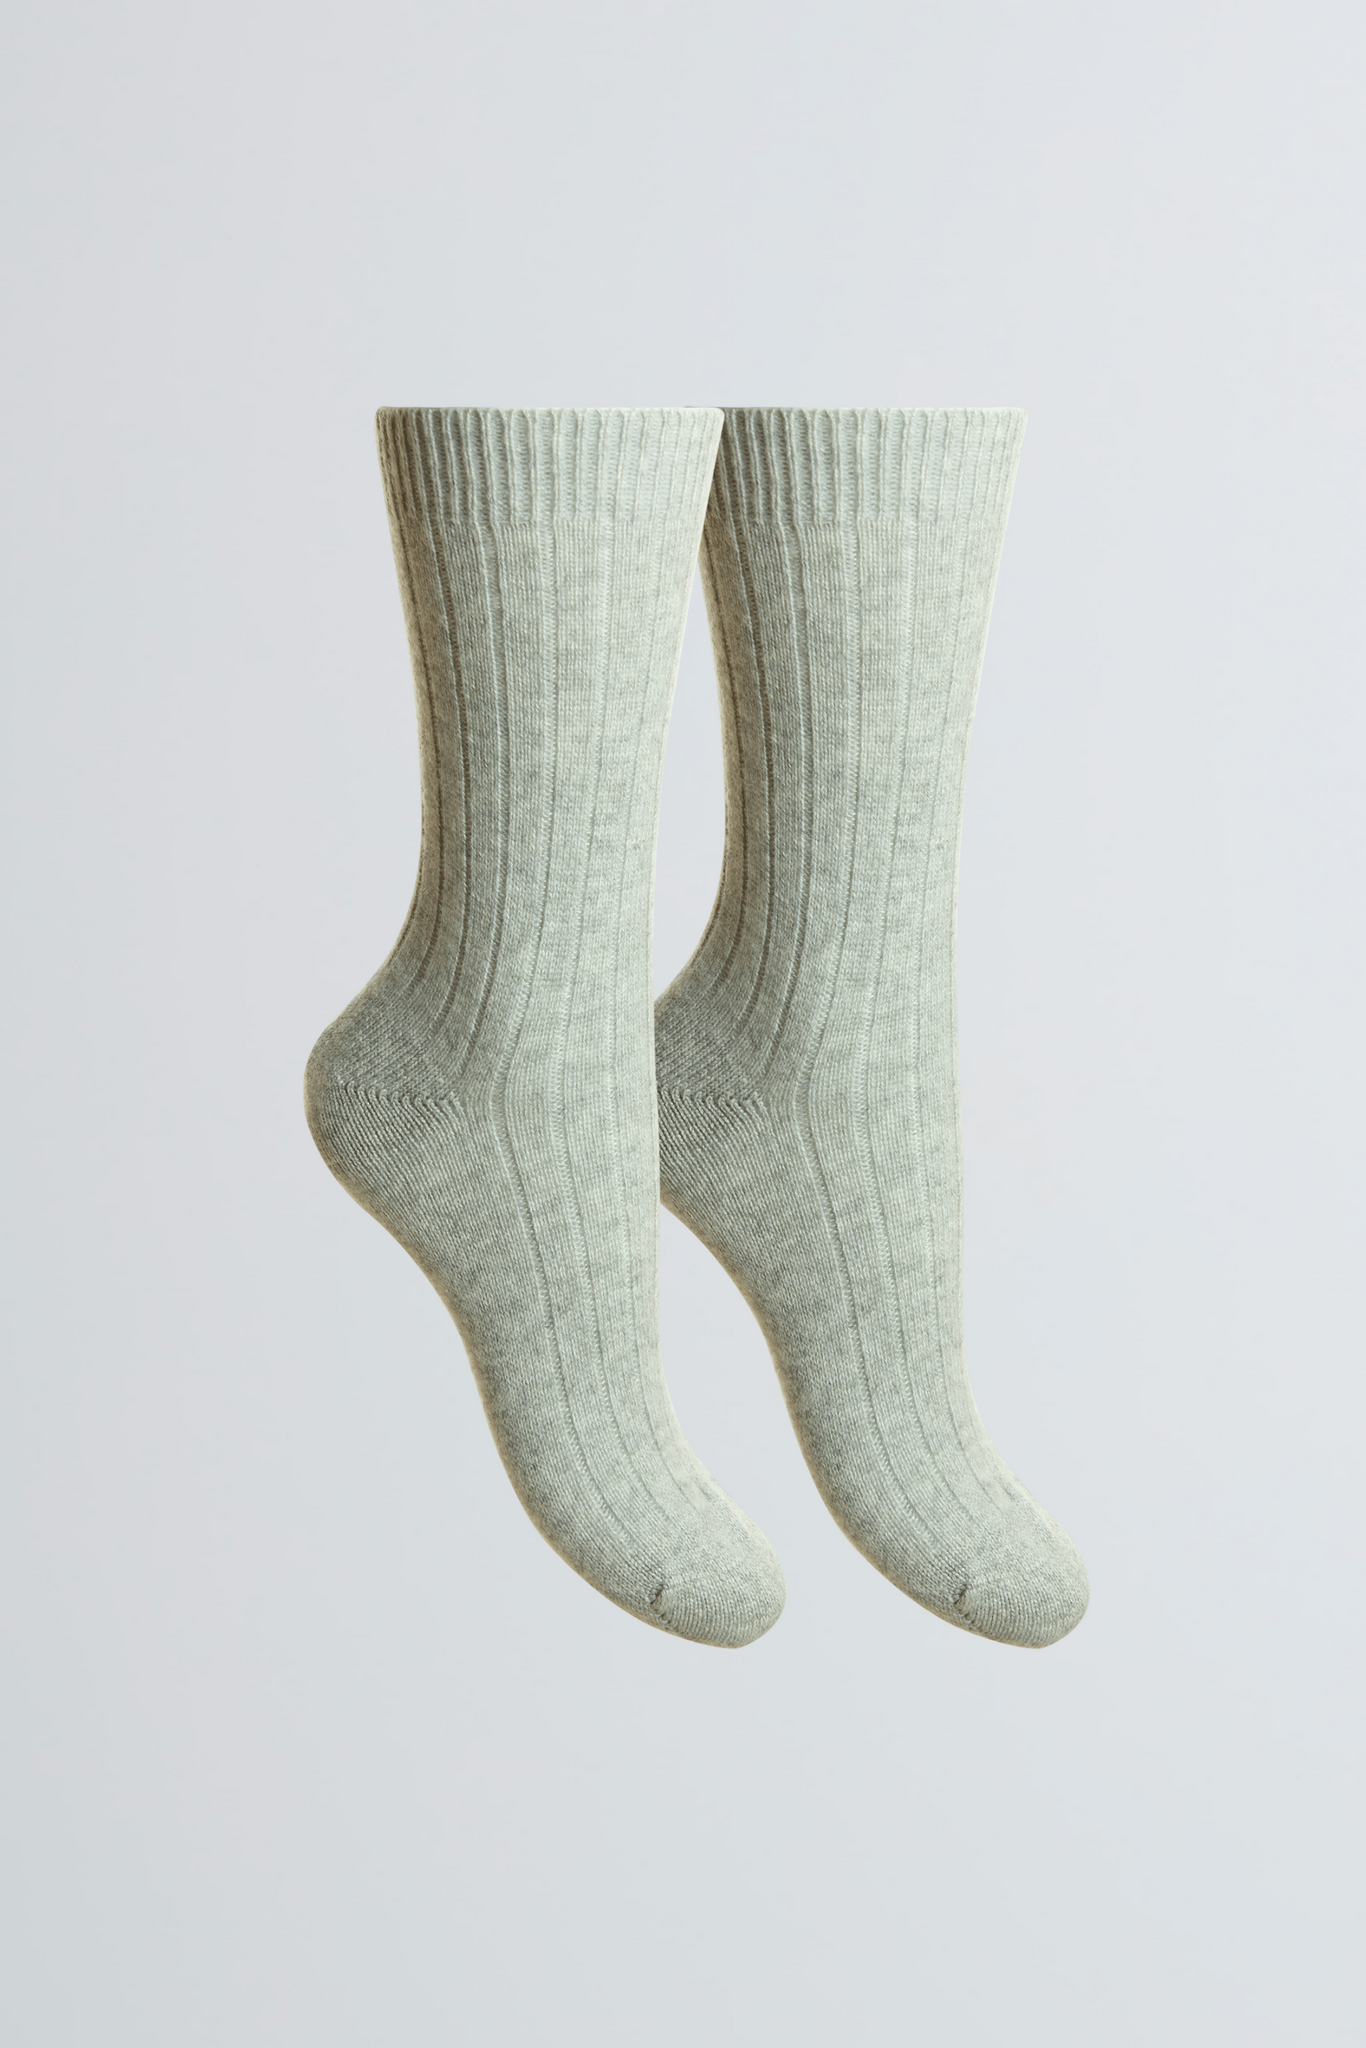 Soft Scottish Cashmere Women's Socks - Comfortable Grey Socks by Lavender Hill Clothing - Cozy Bed Socks